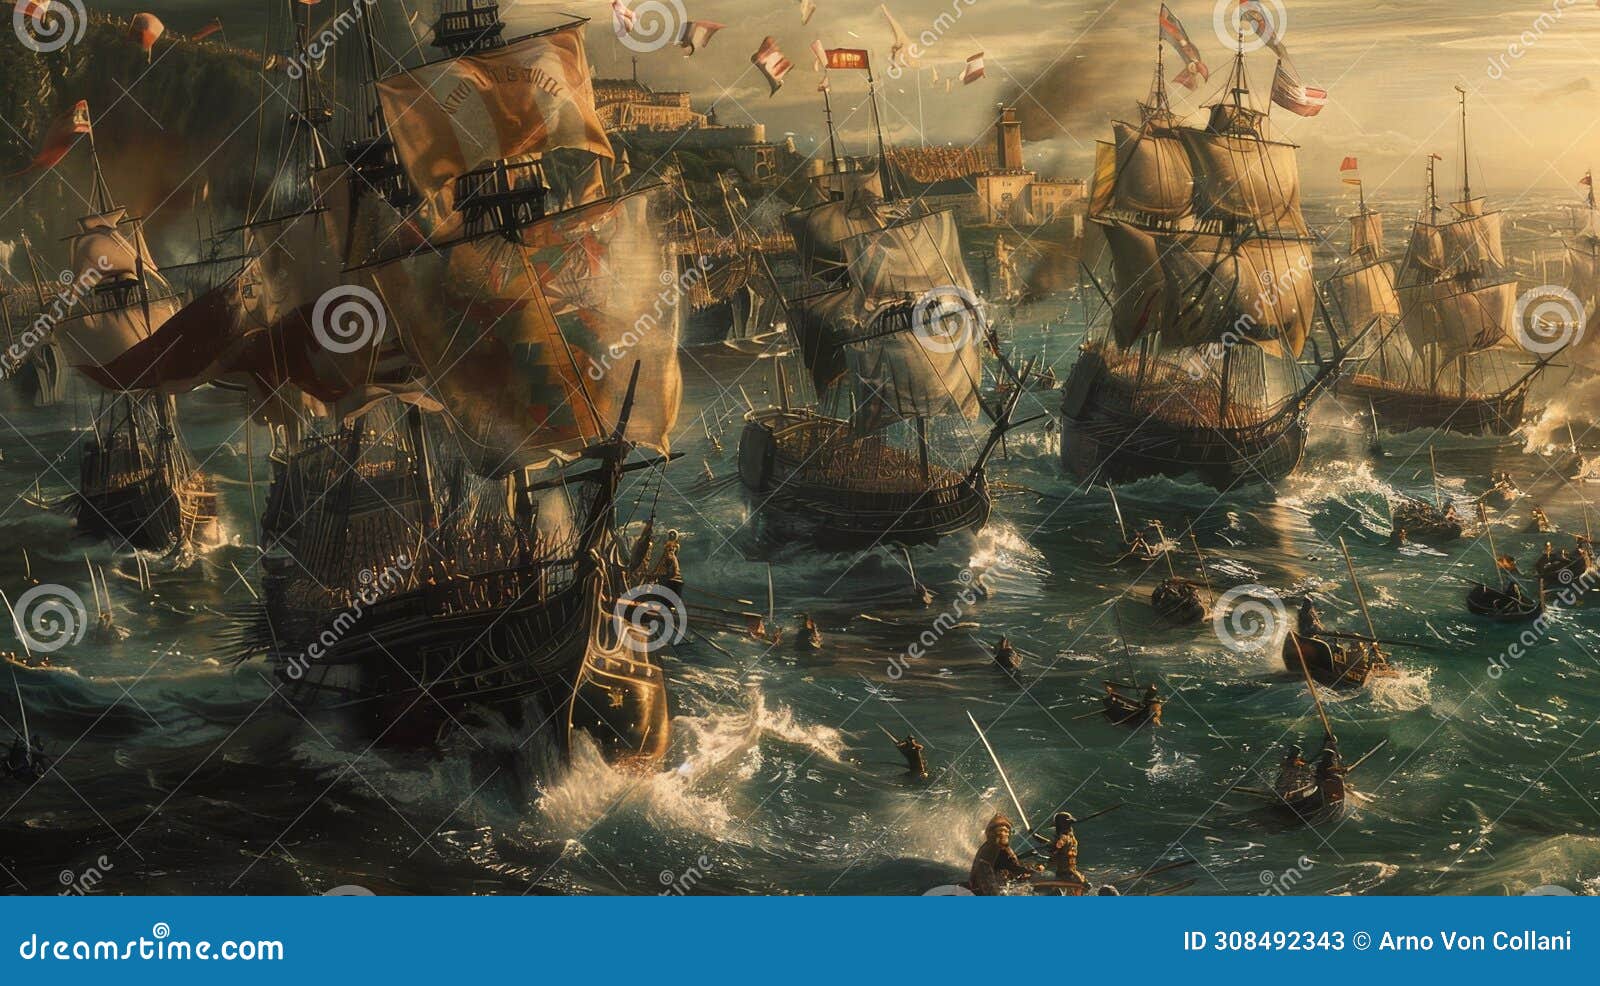 spanish armada: epic naval confrontation along england's shores